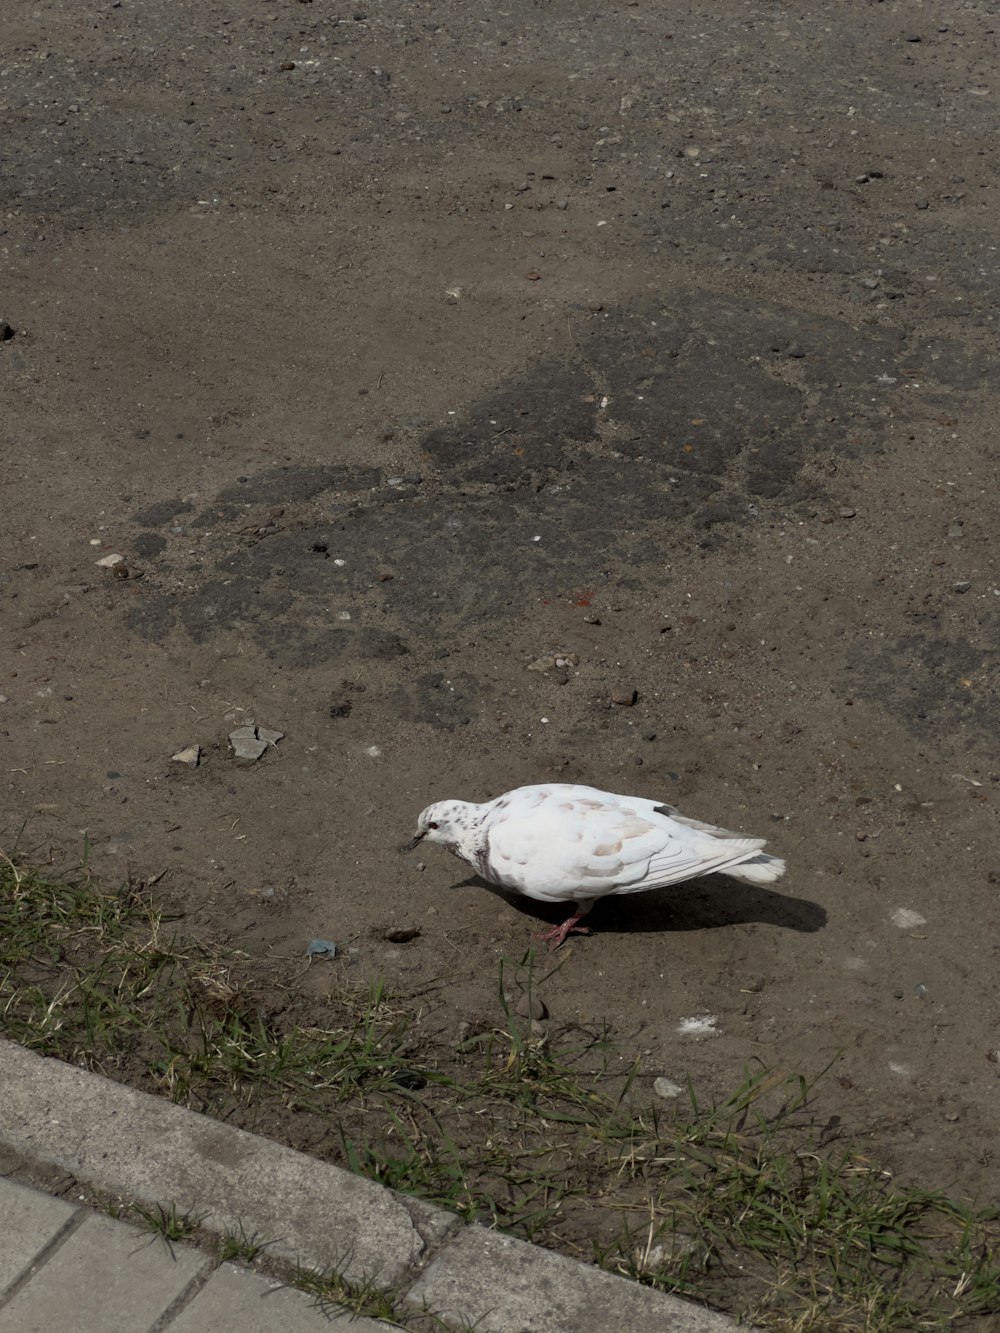 a white bird standing on top of a dirt field